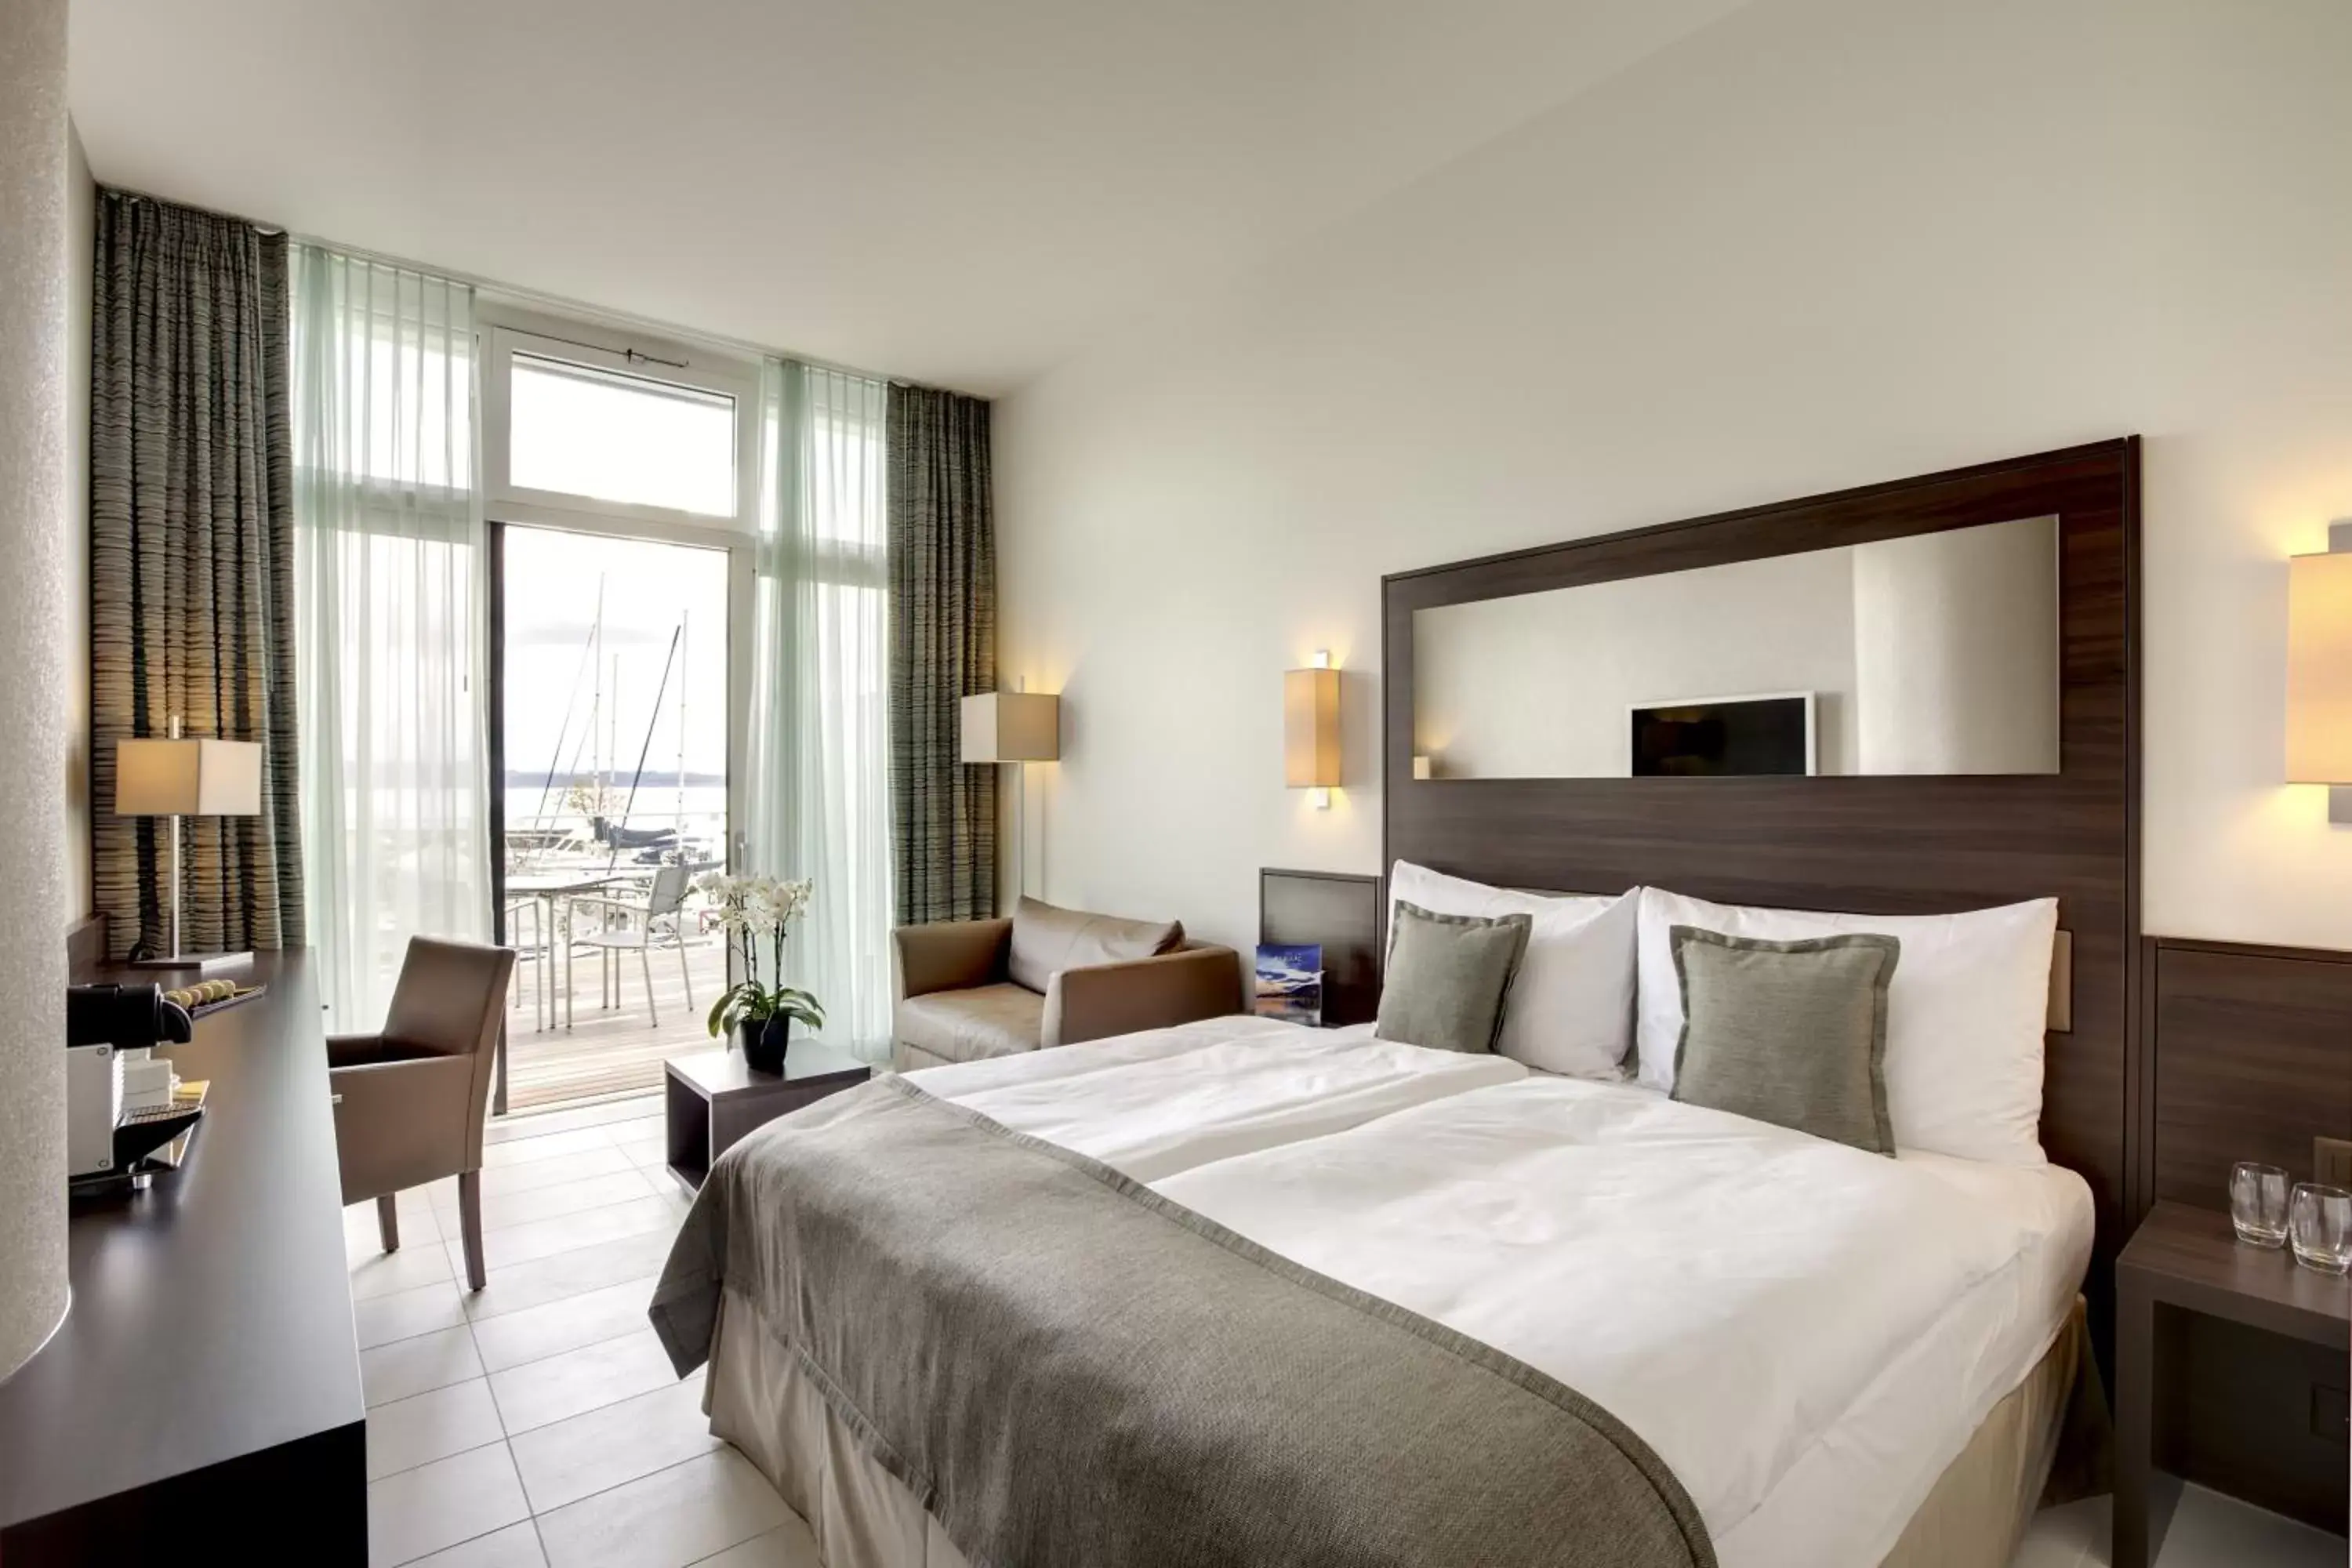 Bedroom, Bed in Best Western Premier Hotel Beaulac